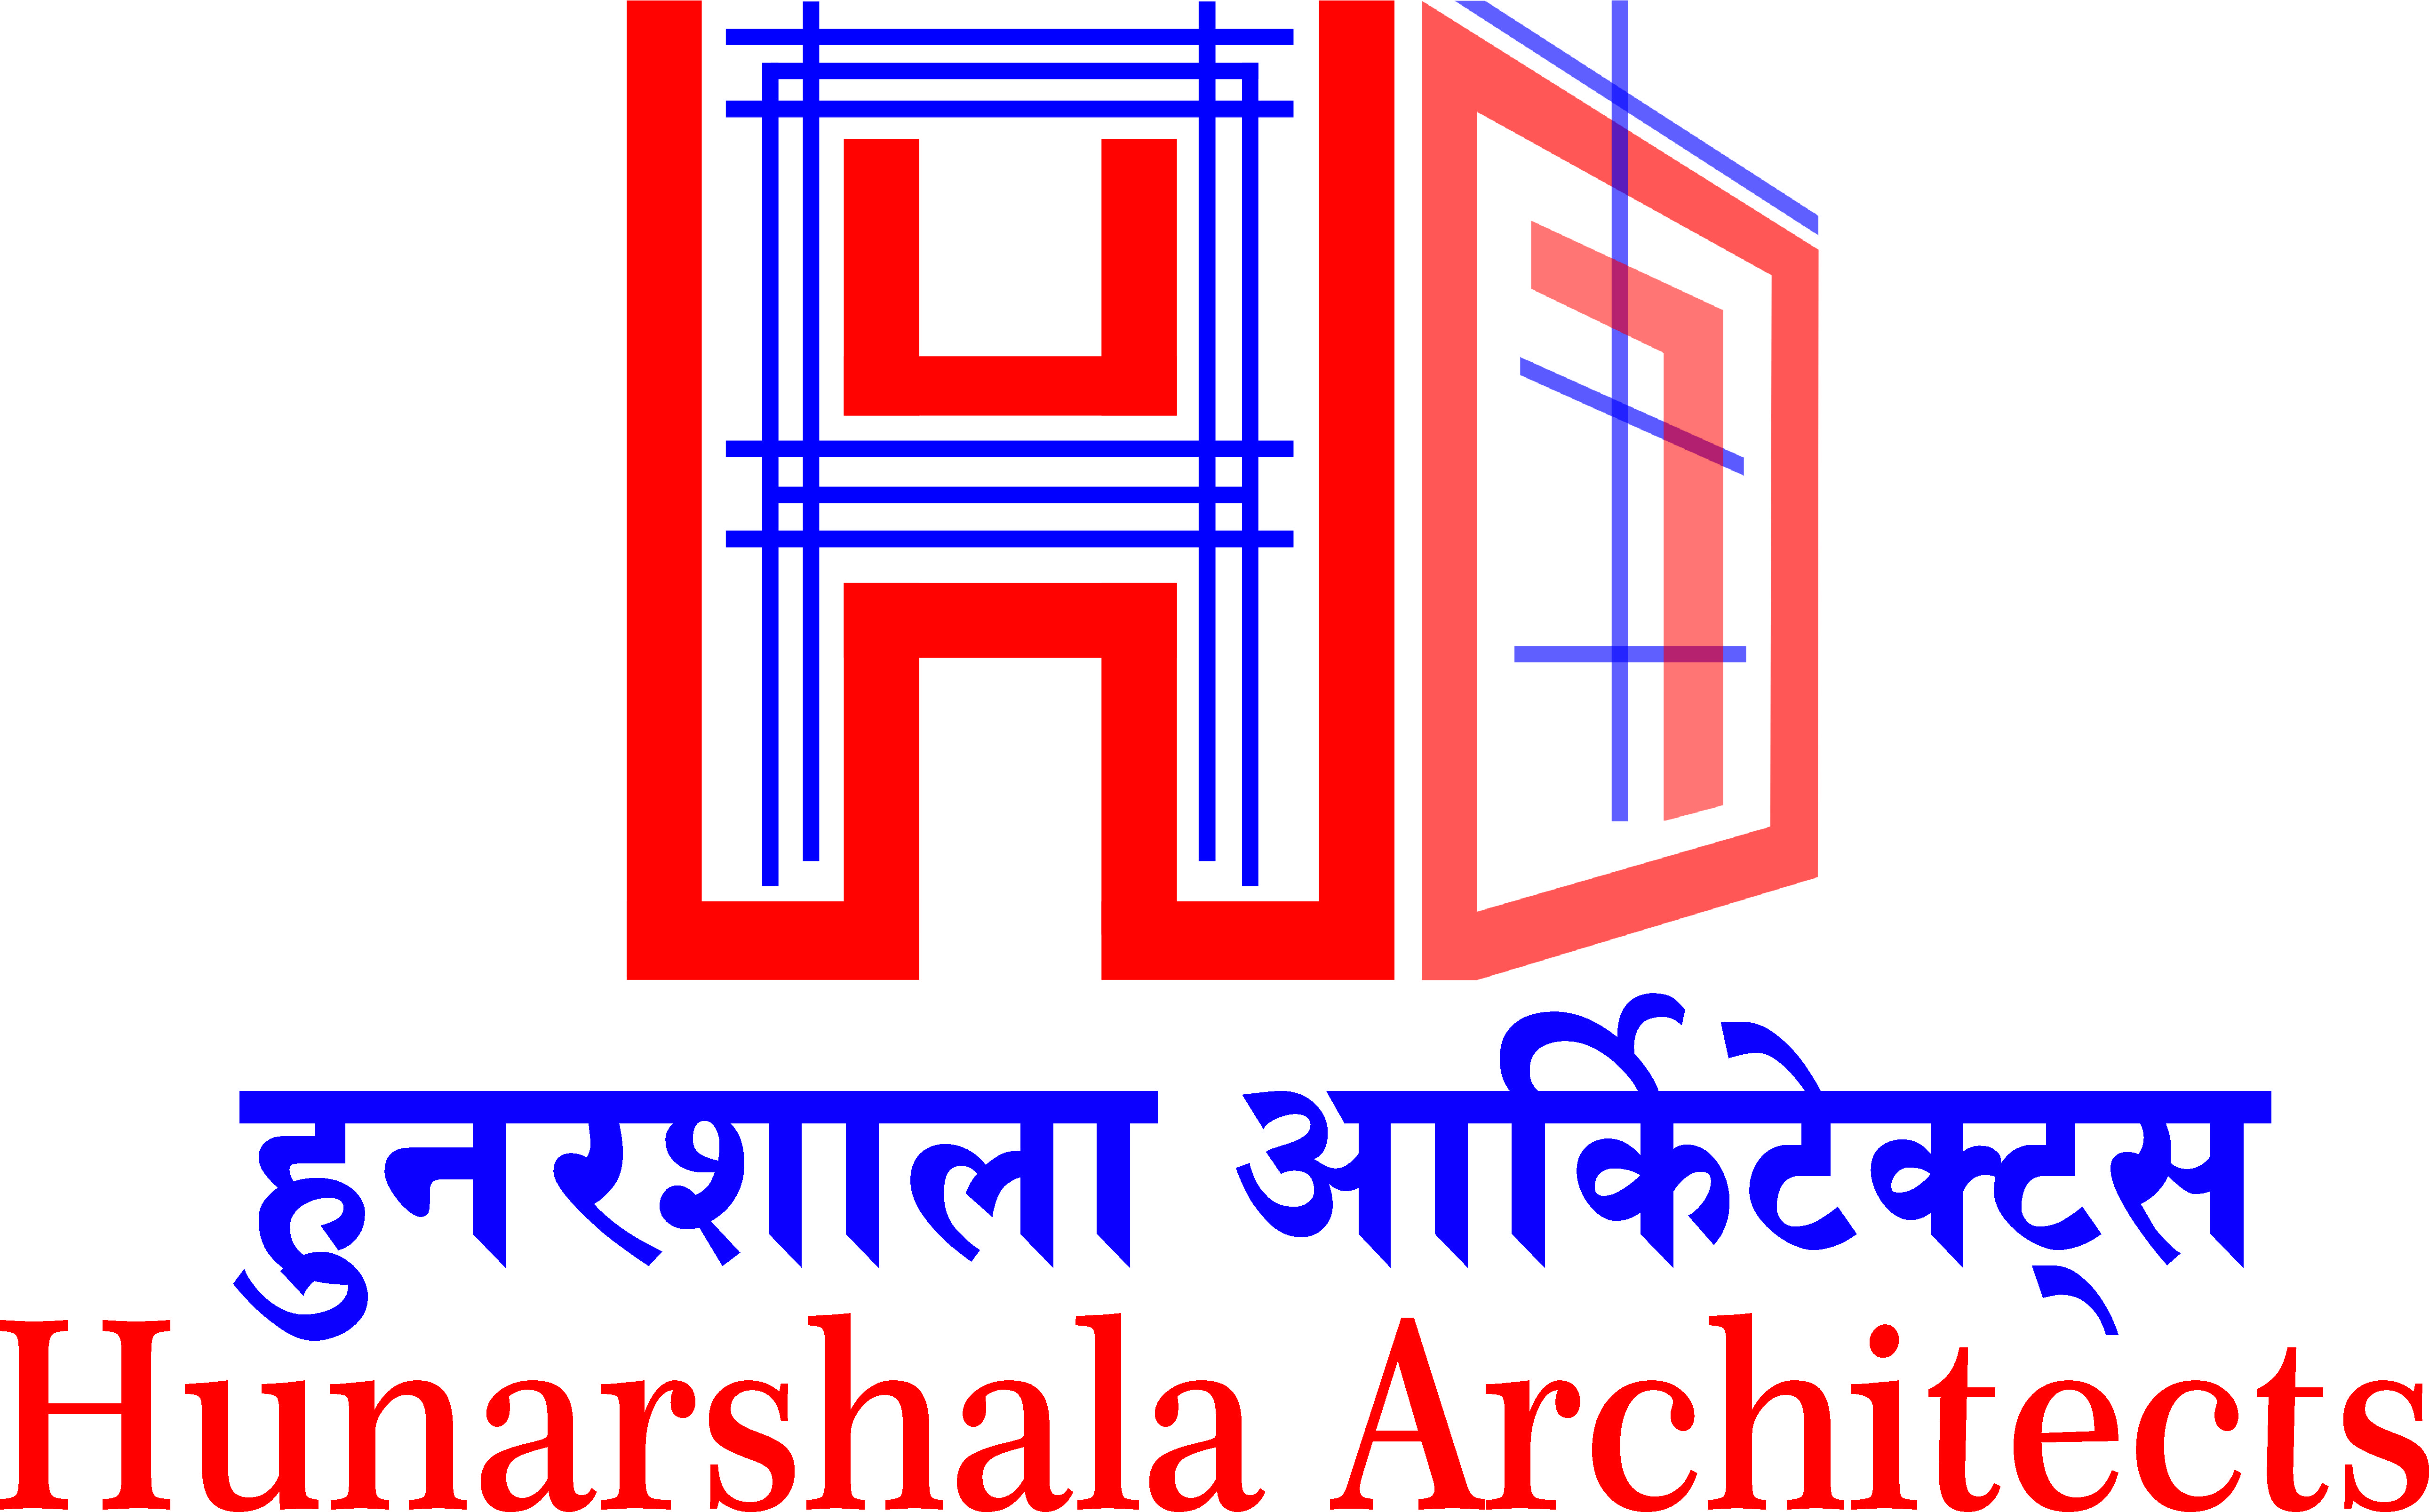 Hunarshala Architects|Architect|Professional Services